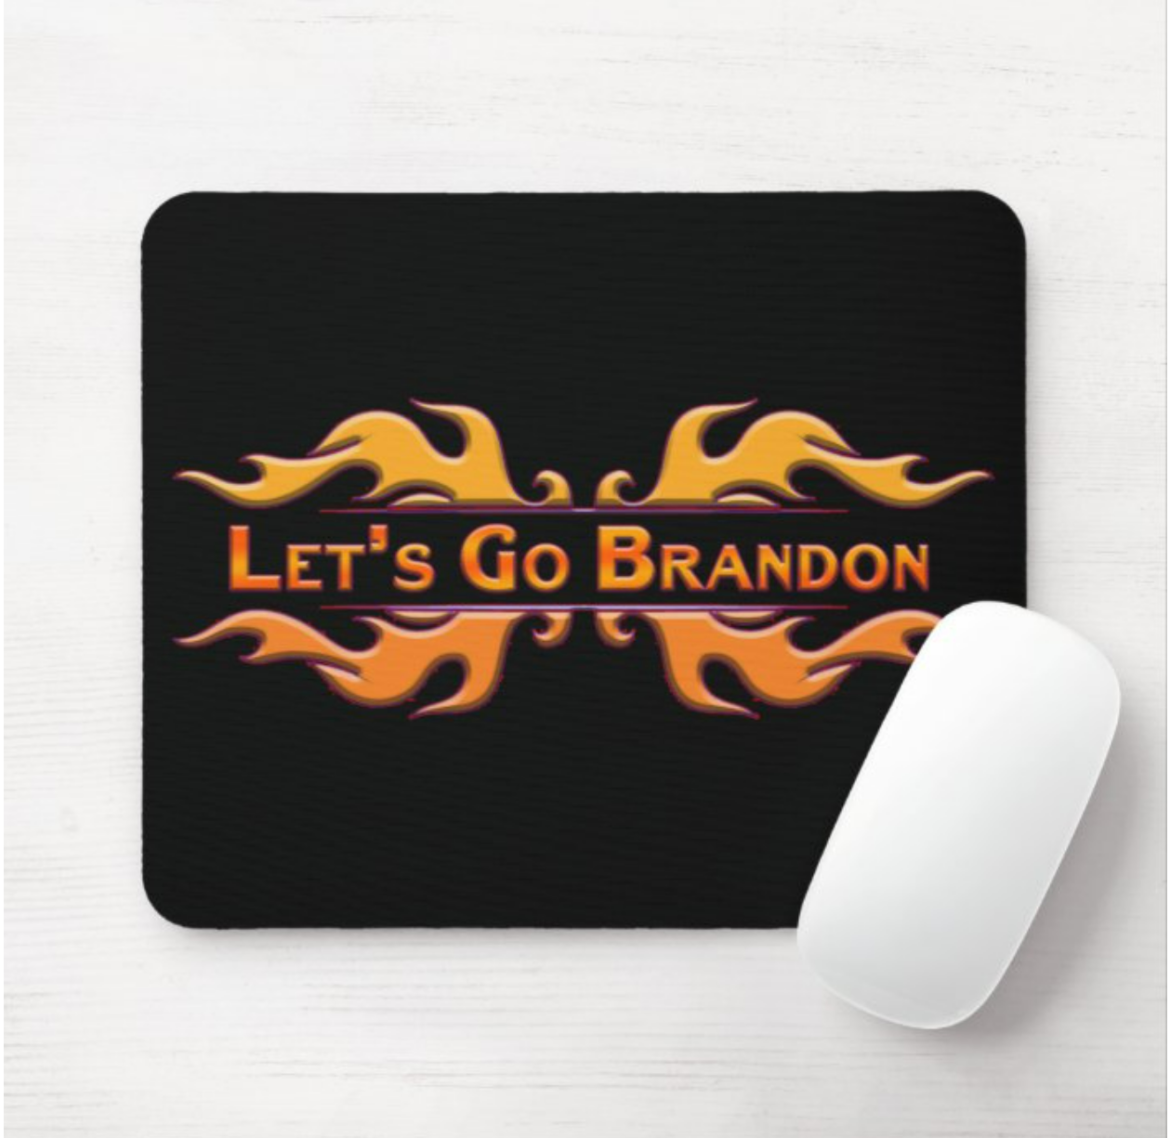 Let’s Go Brandon/FJB Mouse Pads $7